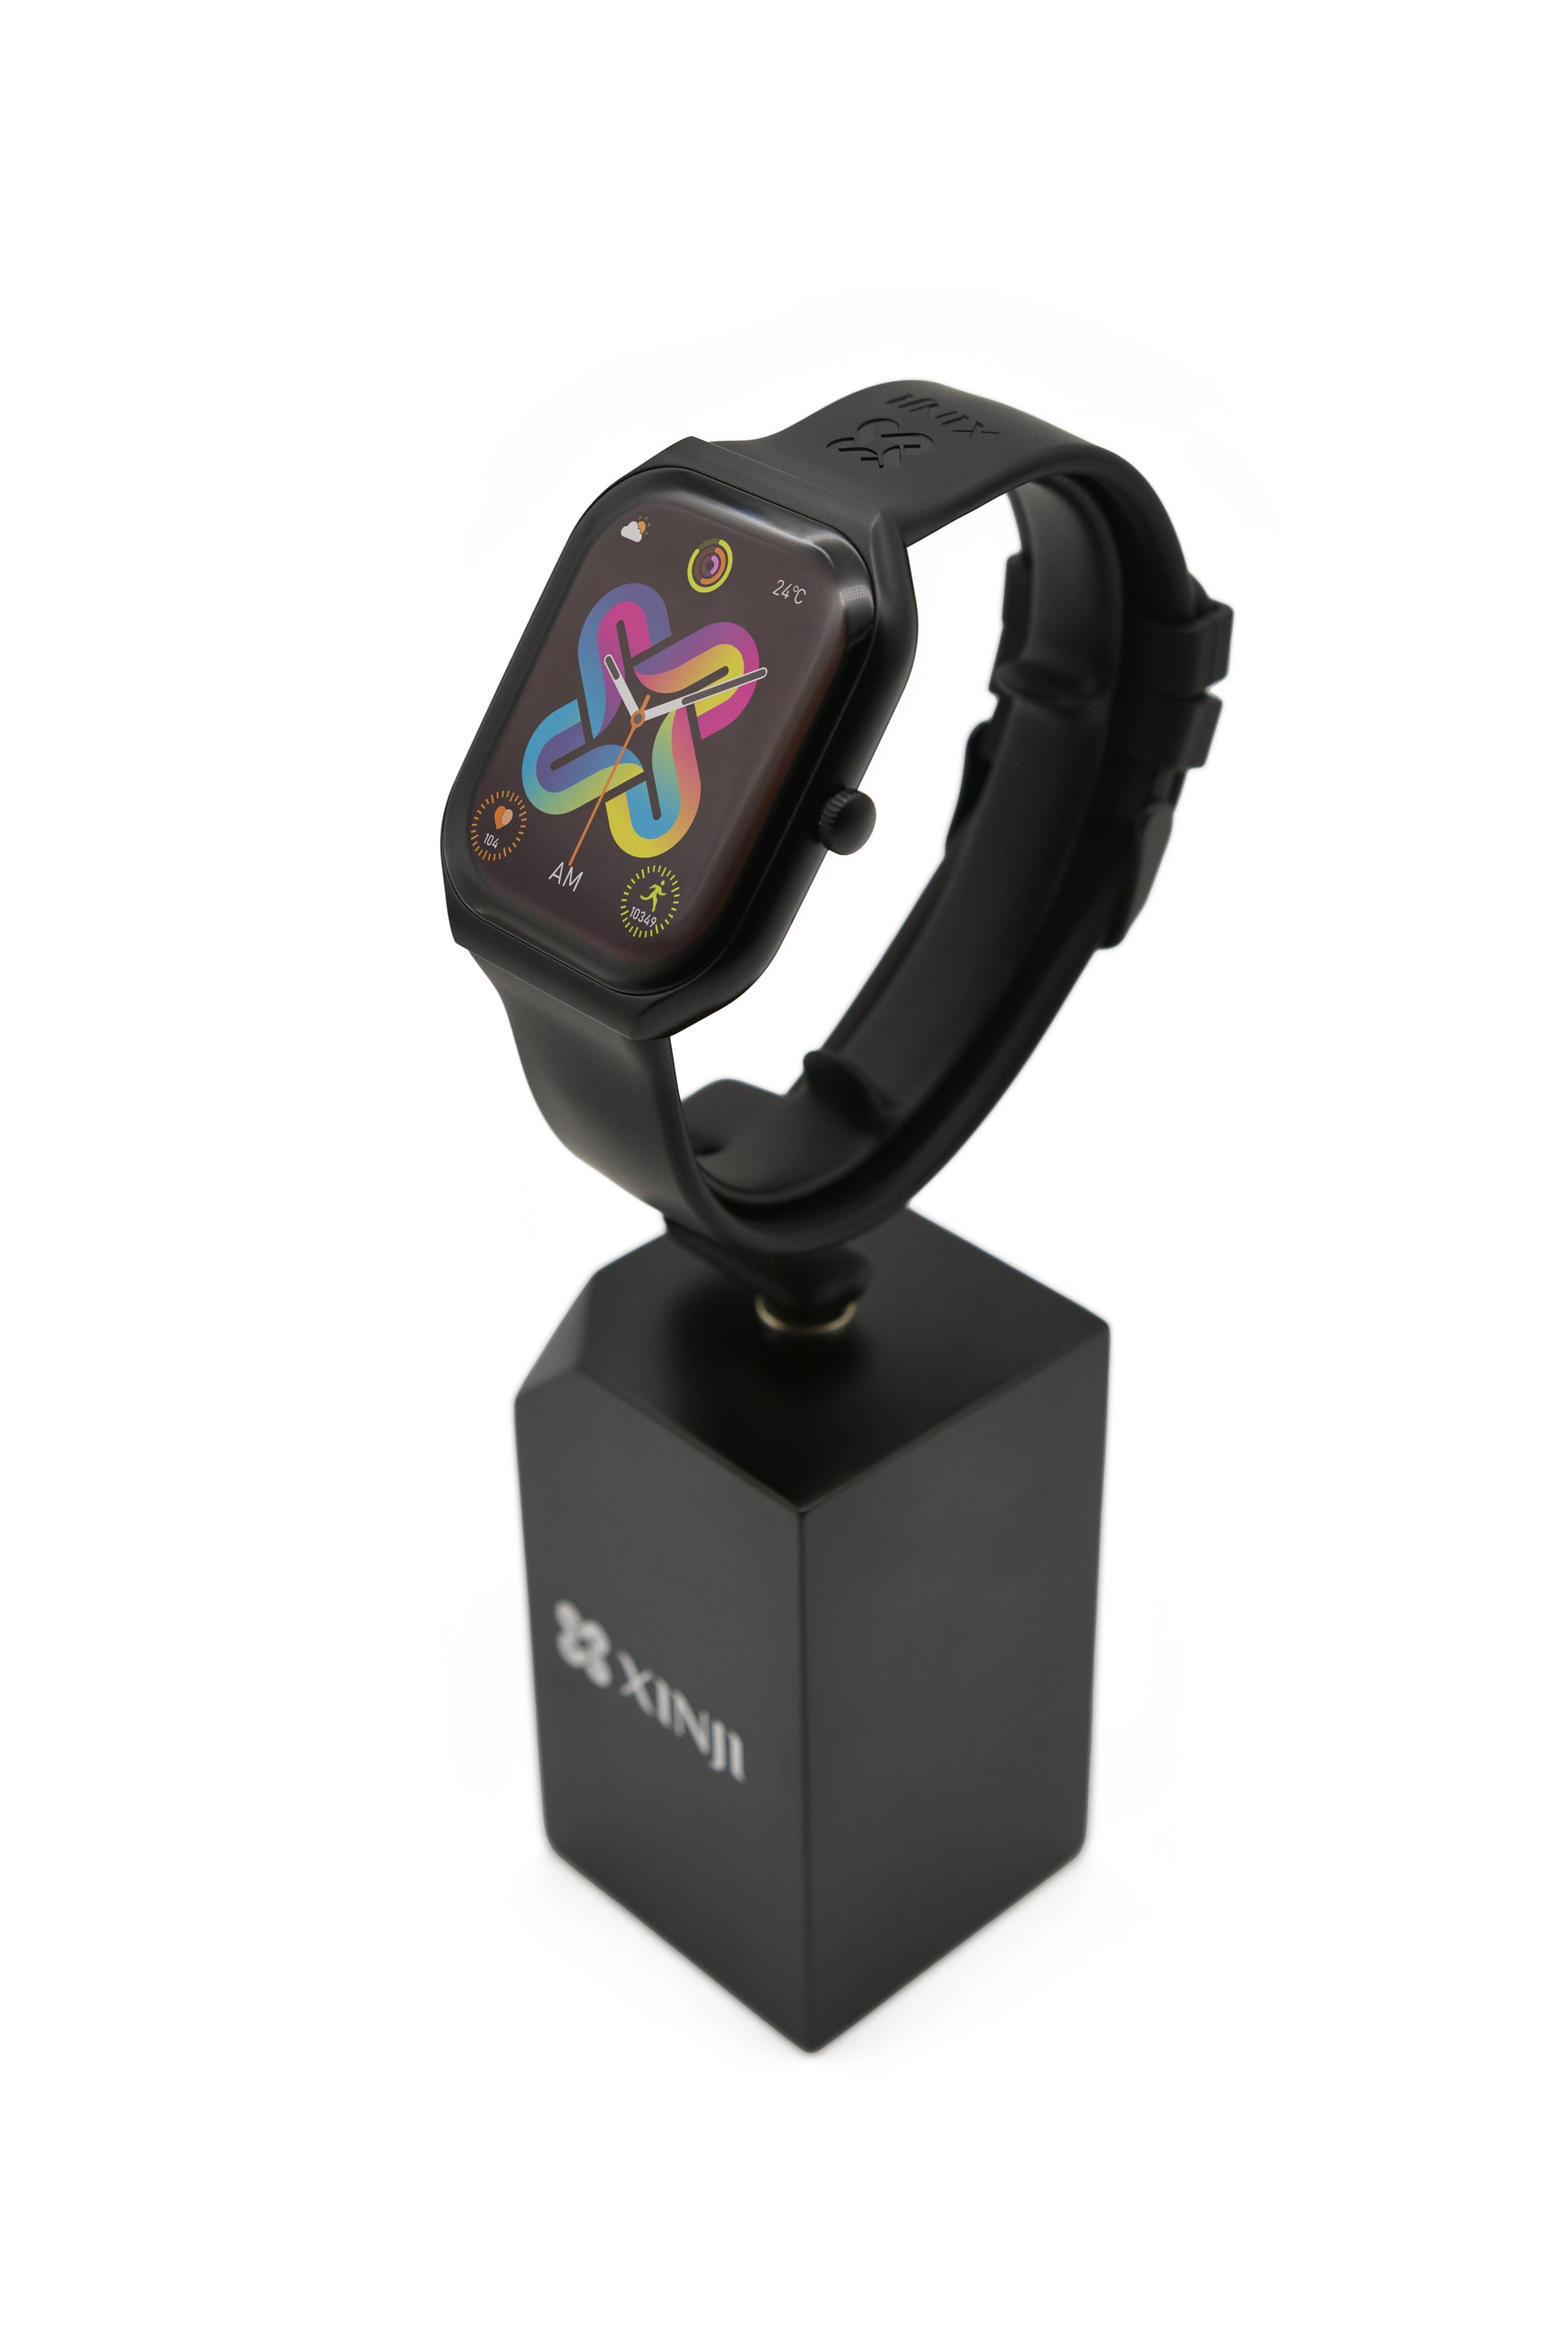 XINJI COBEE CA1 Smart Watch - Black